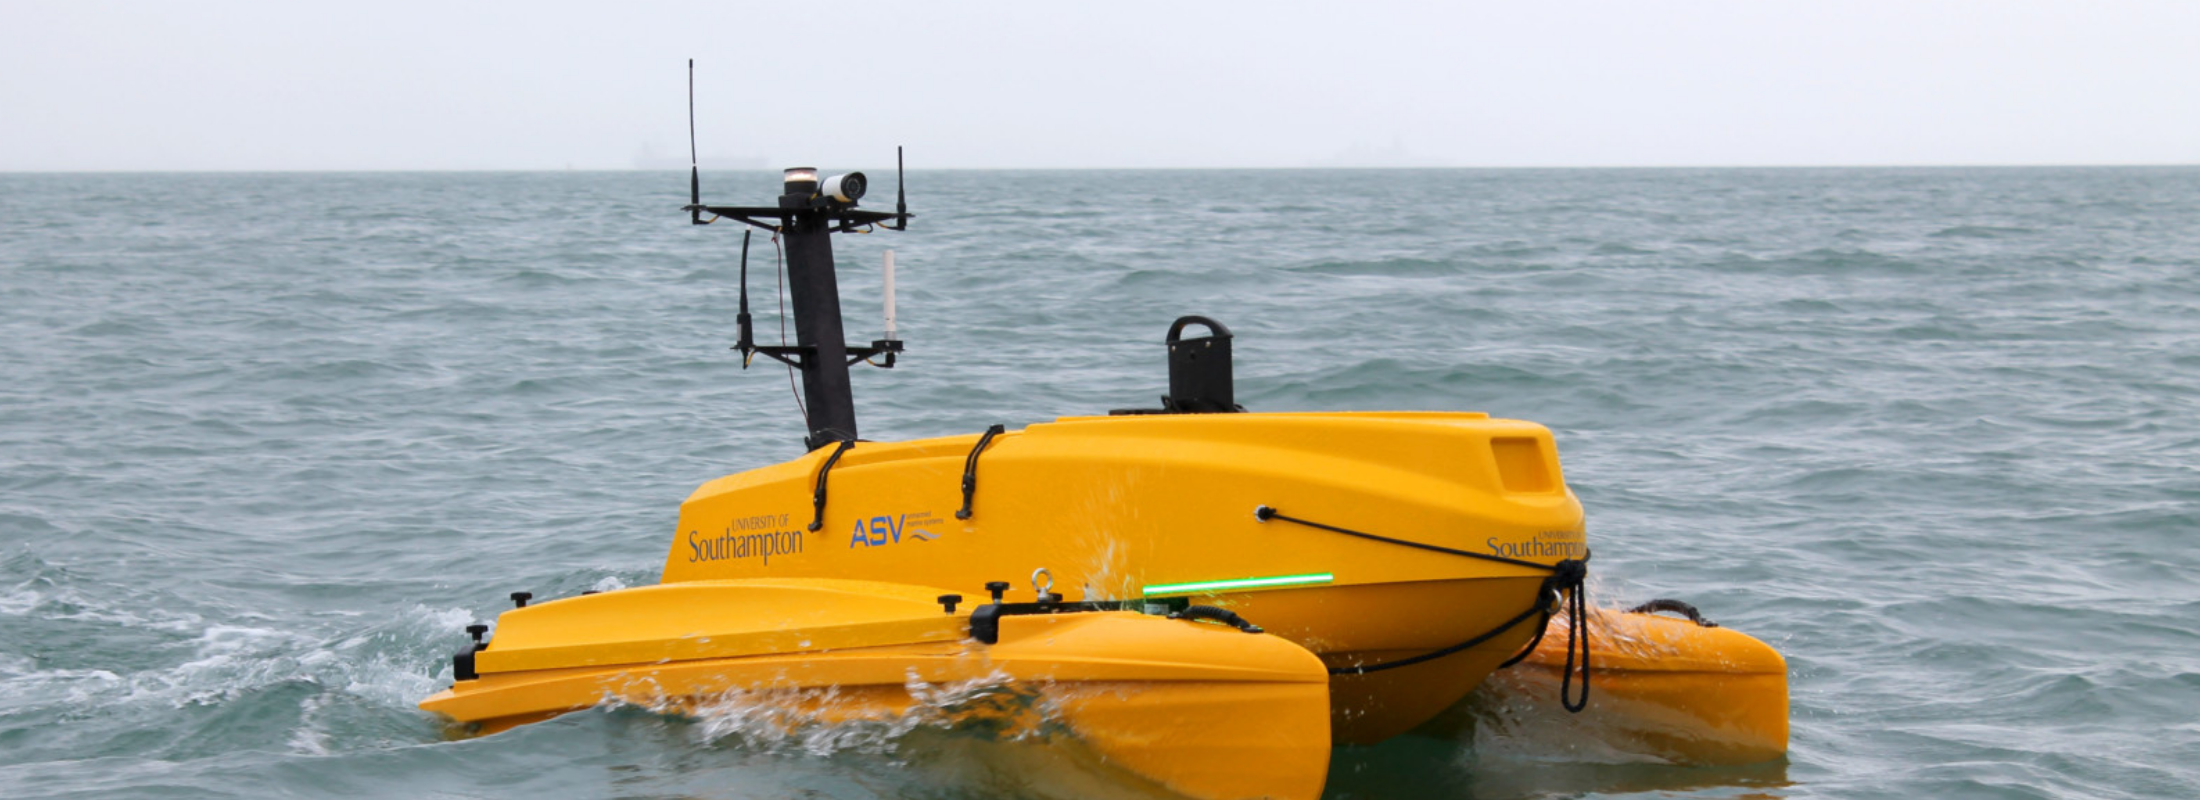 Autonomous boating - dream or reality? 